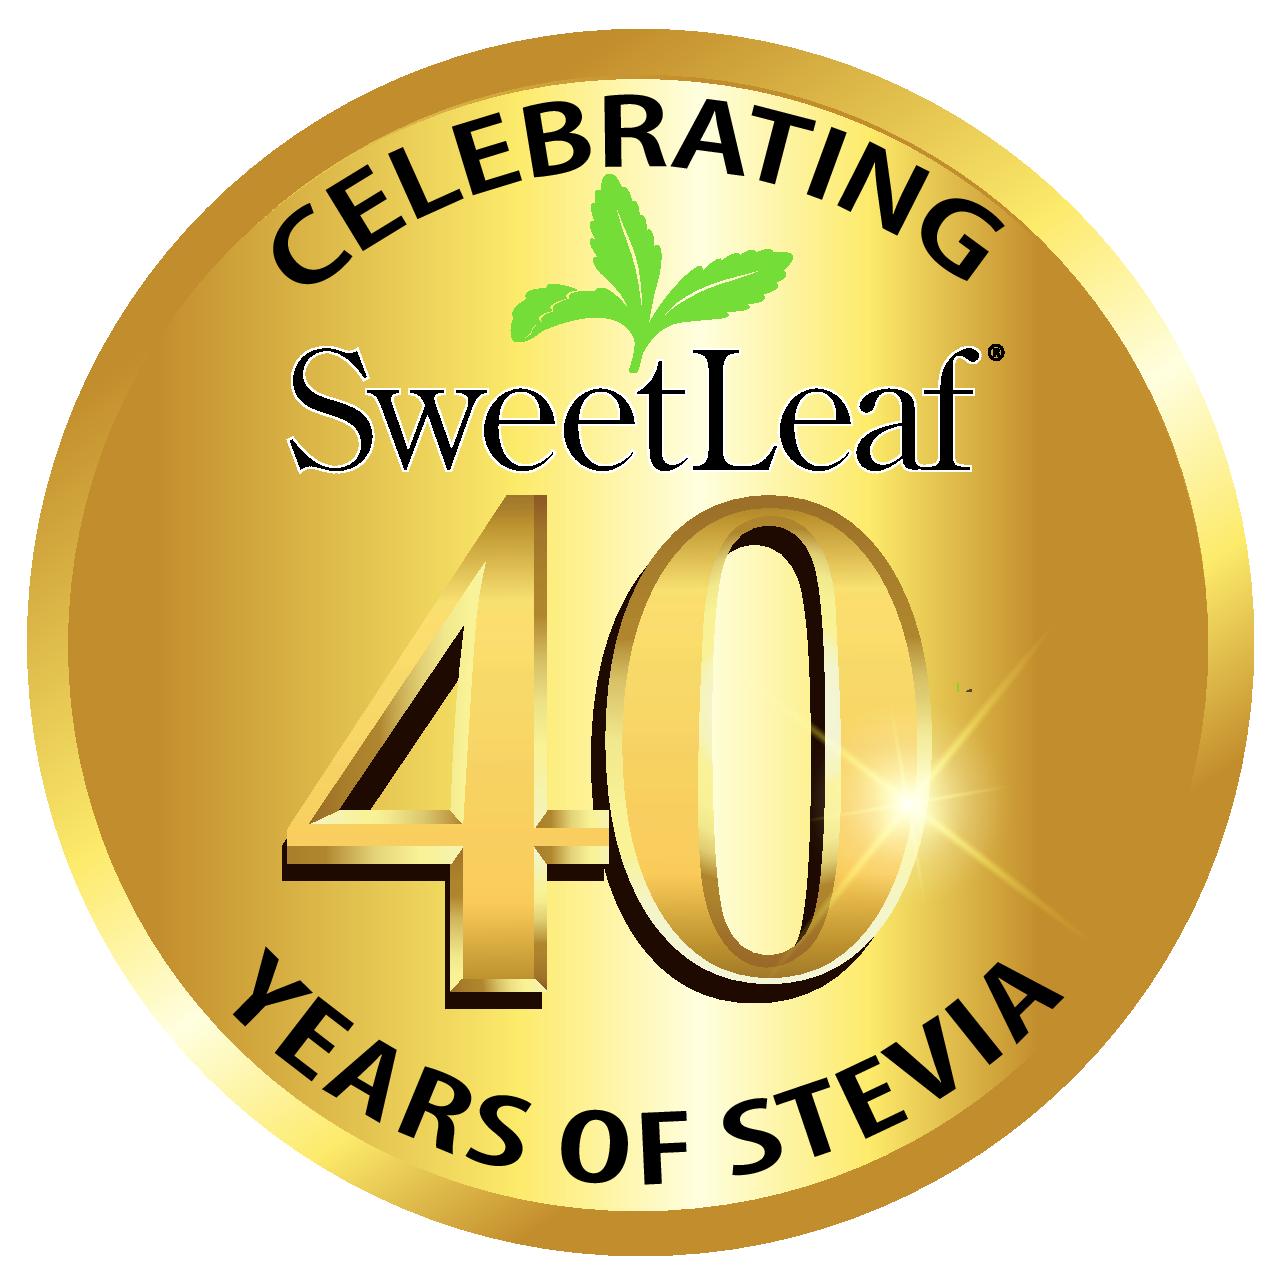 SweetLeaf 40th Anniversary